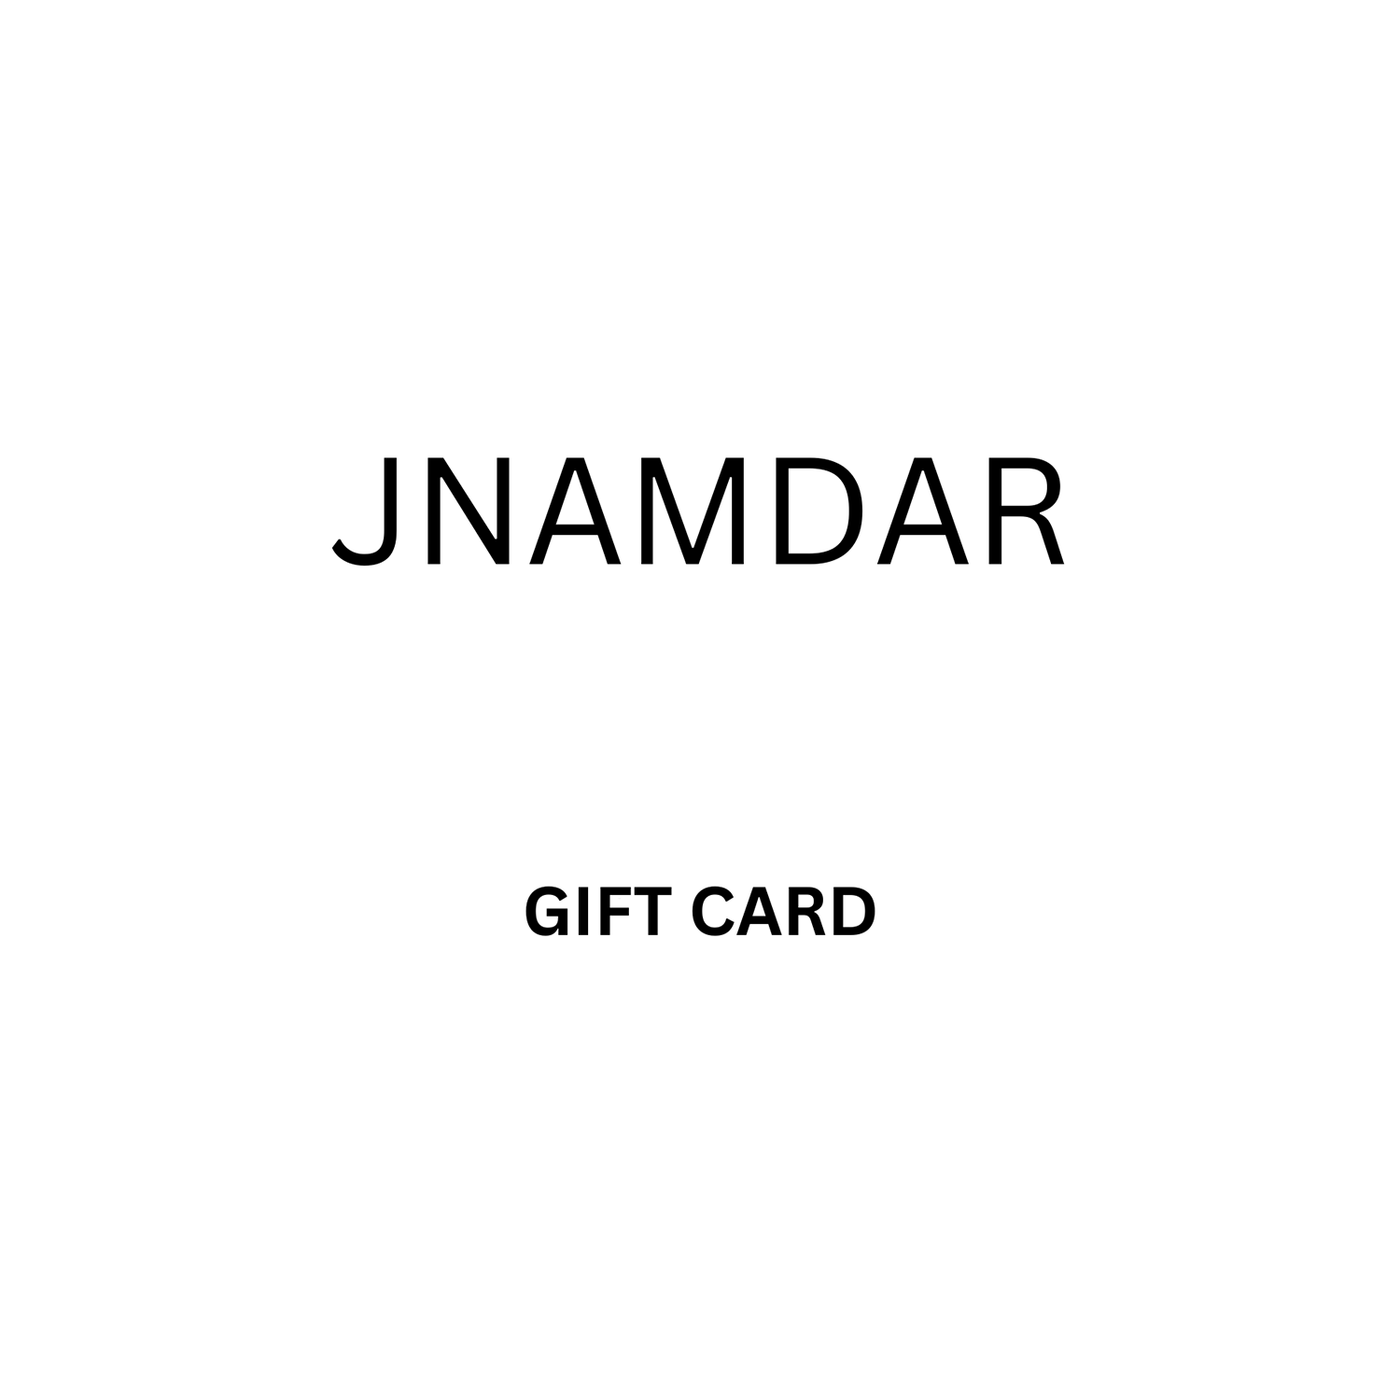 JNAMDAR'S GIFT CARD